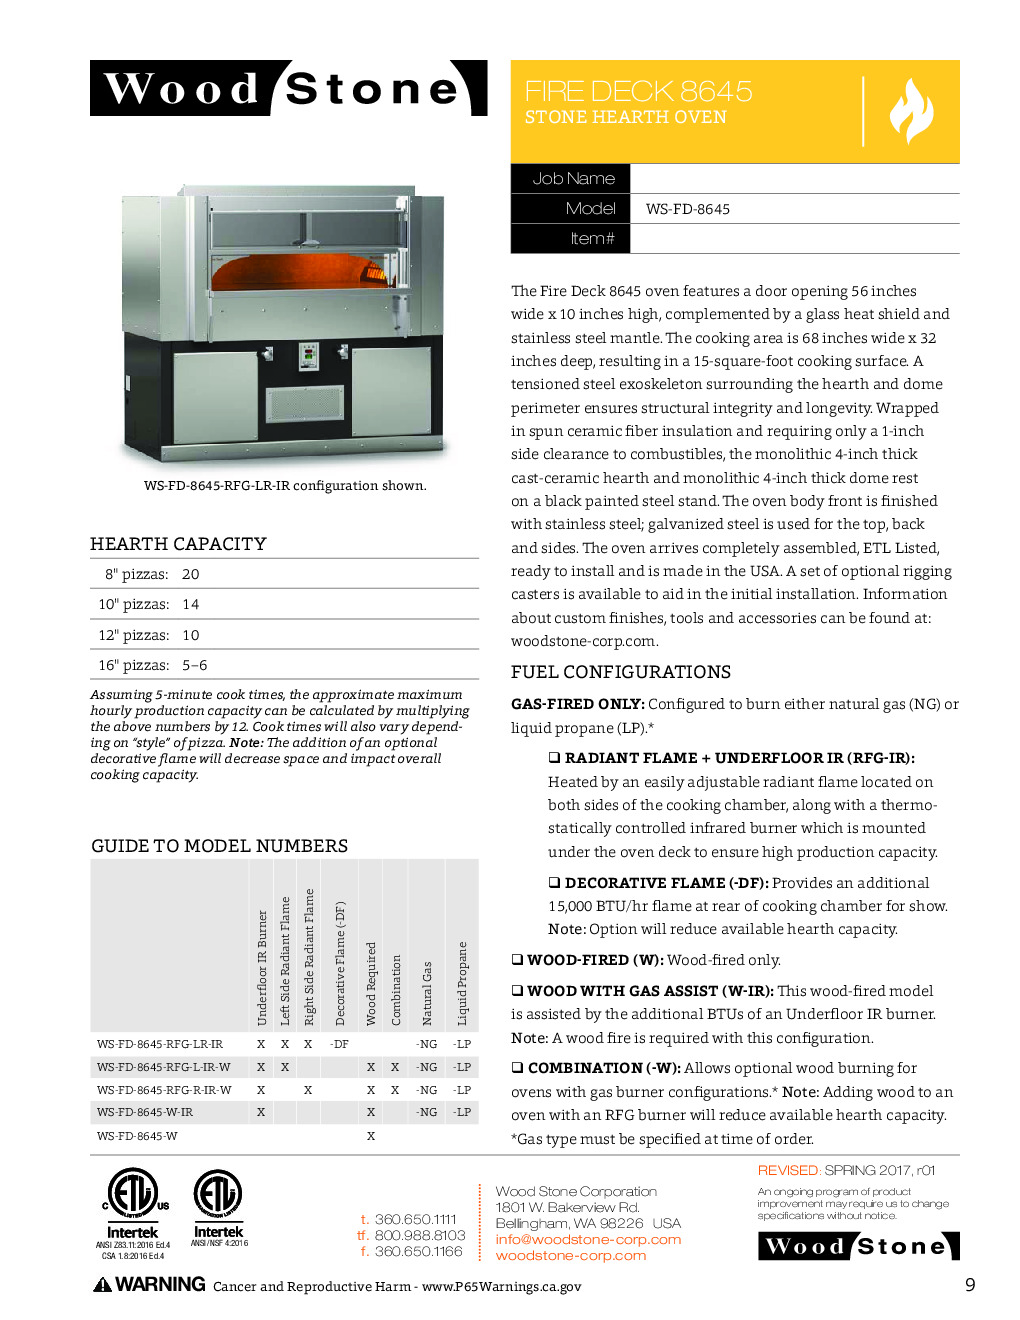 Wood Stone FD-8645-RFGLRIRW Wood / Coal / Gas Fired Oven